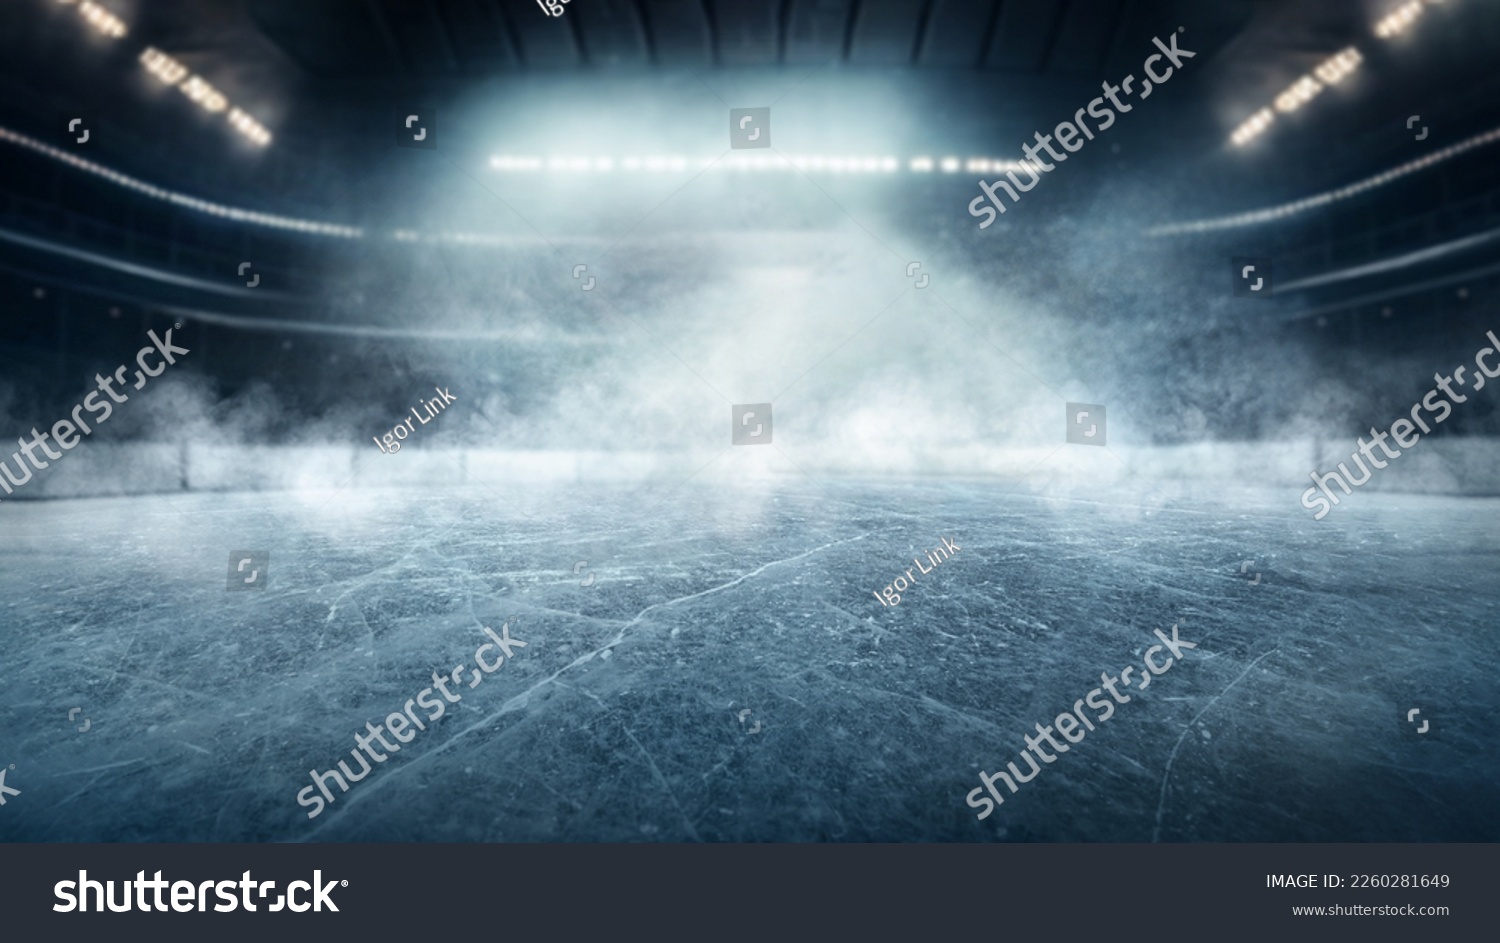  Hockey ice rink sport arena empty field - stadium #2260281649